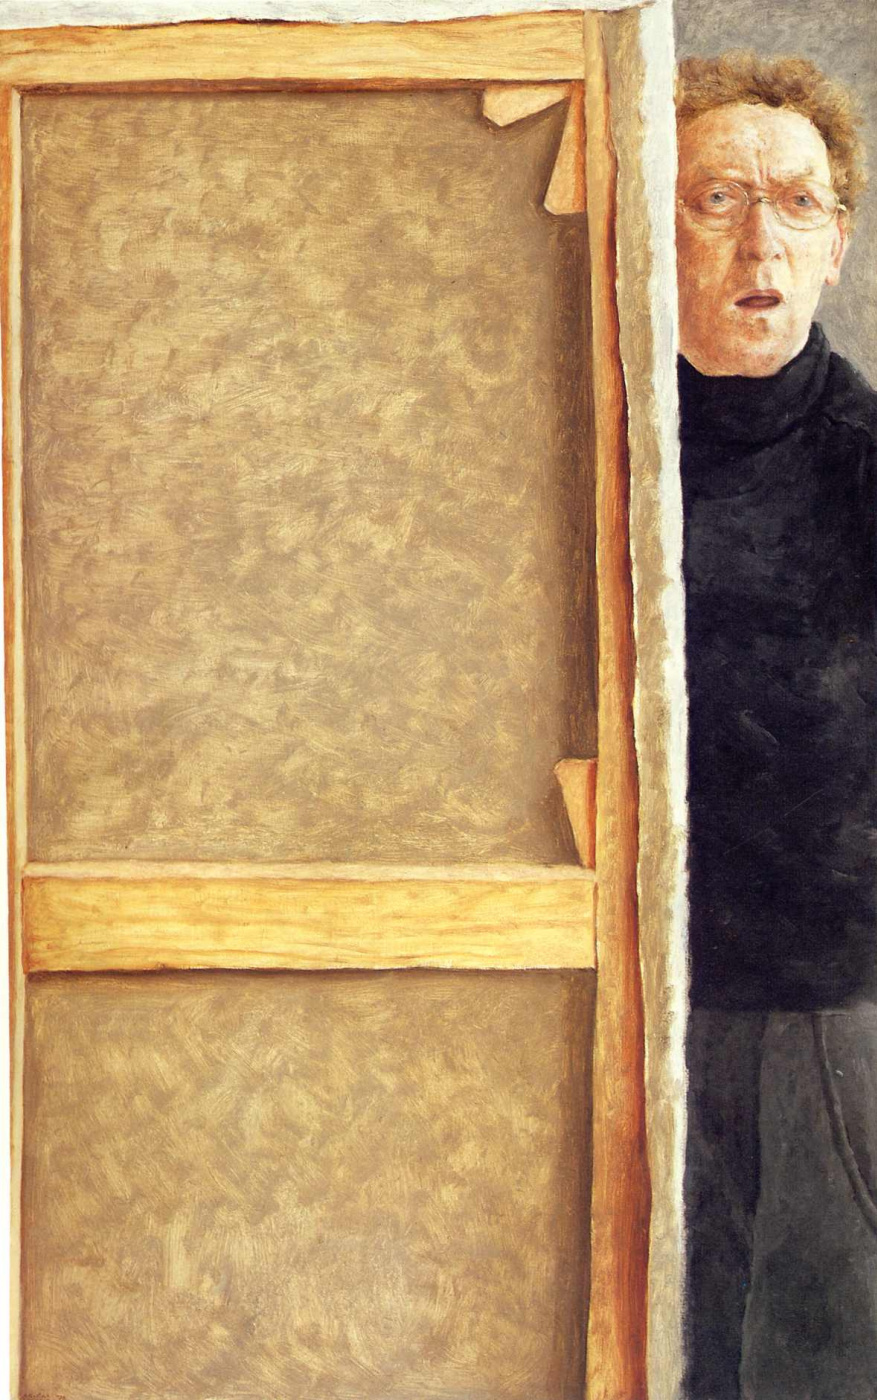 Avigdor Arica. Self portrait with painting